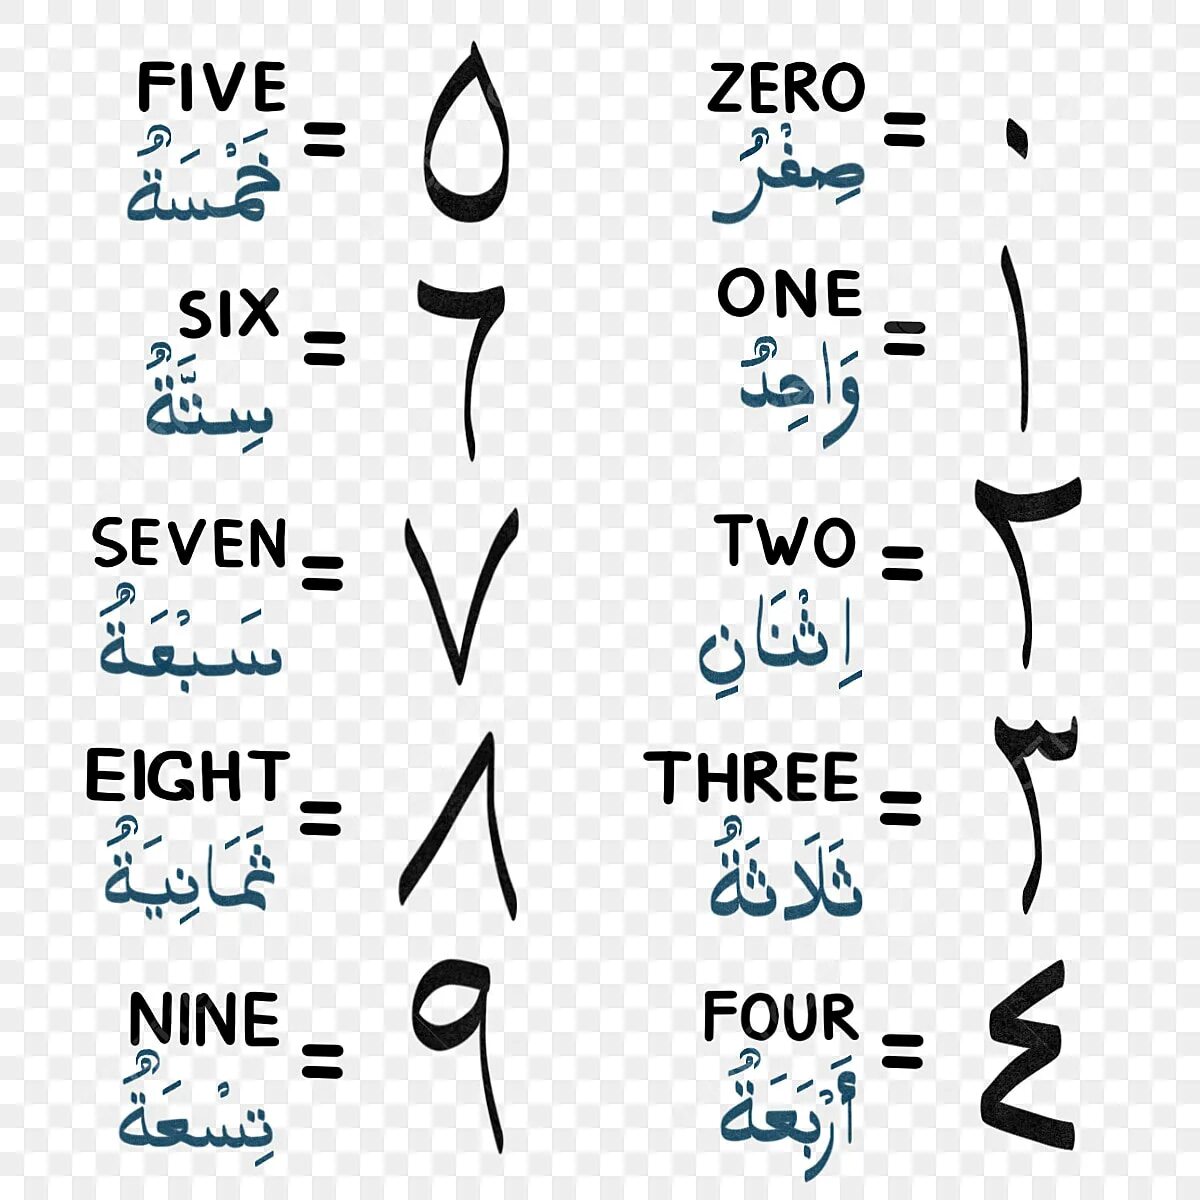 9 на арабском. Арабские числа. Цифры на арабском языке. Арабские цифры на арабском. Цифры по арабски от 0 до 10.